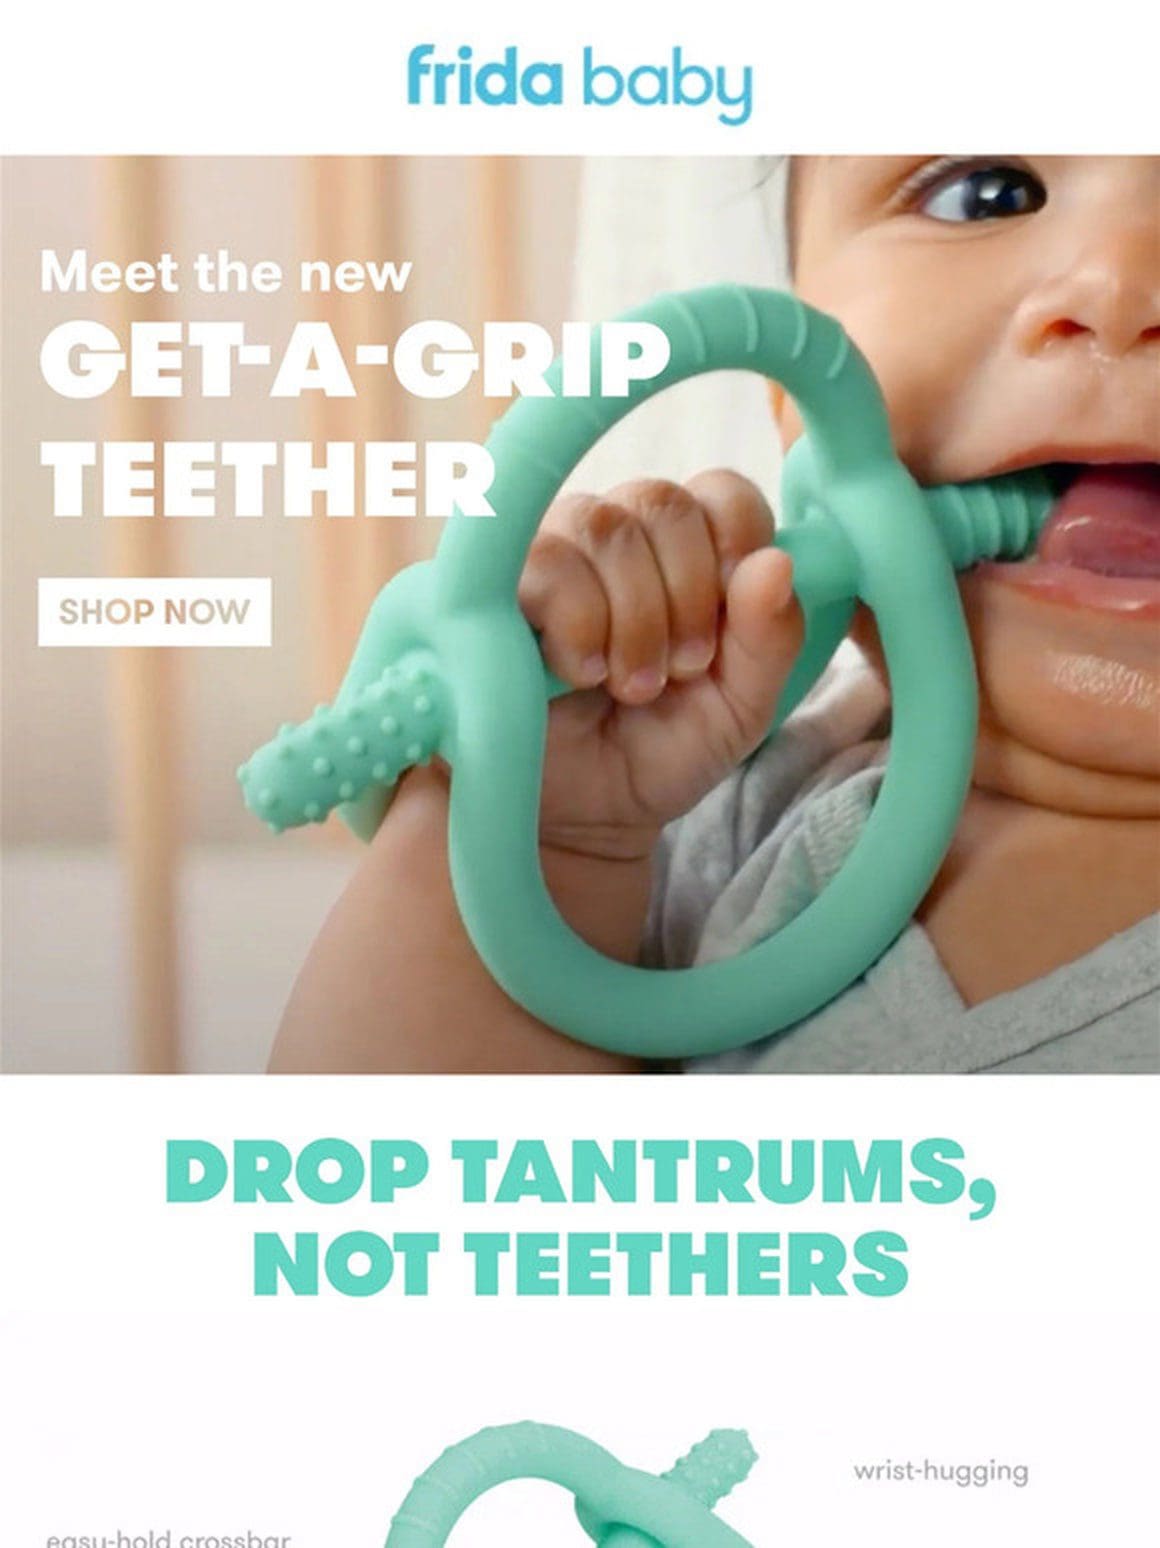 NEW DROP ✊ Get a grip on teething